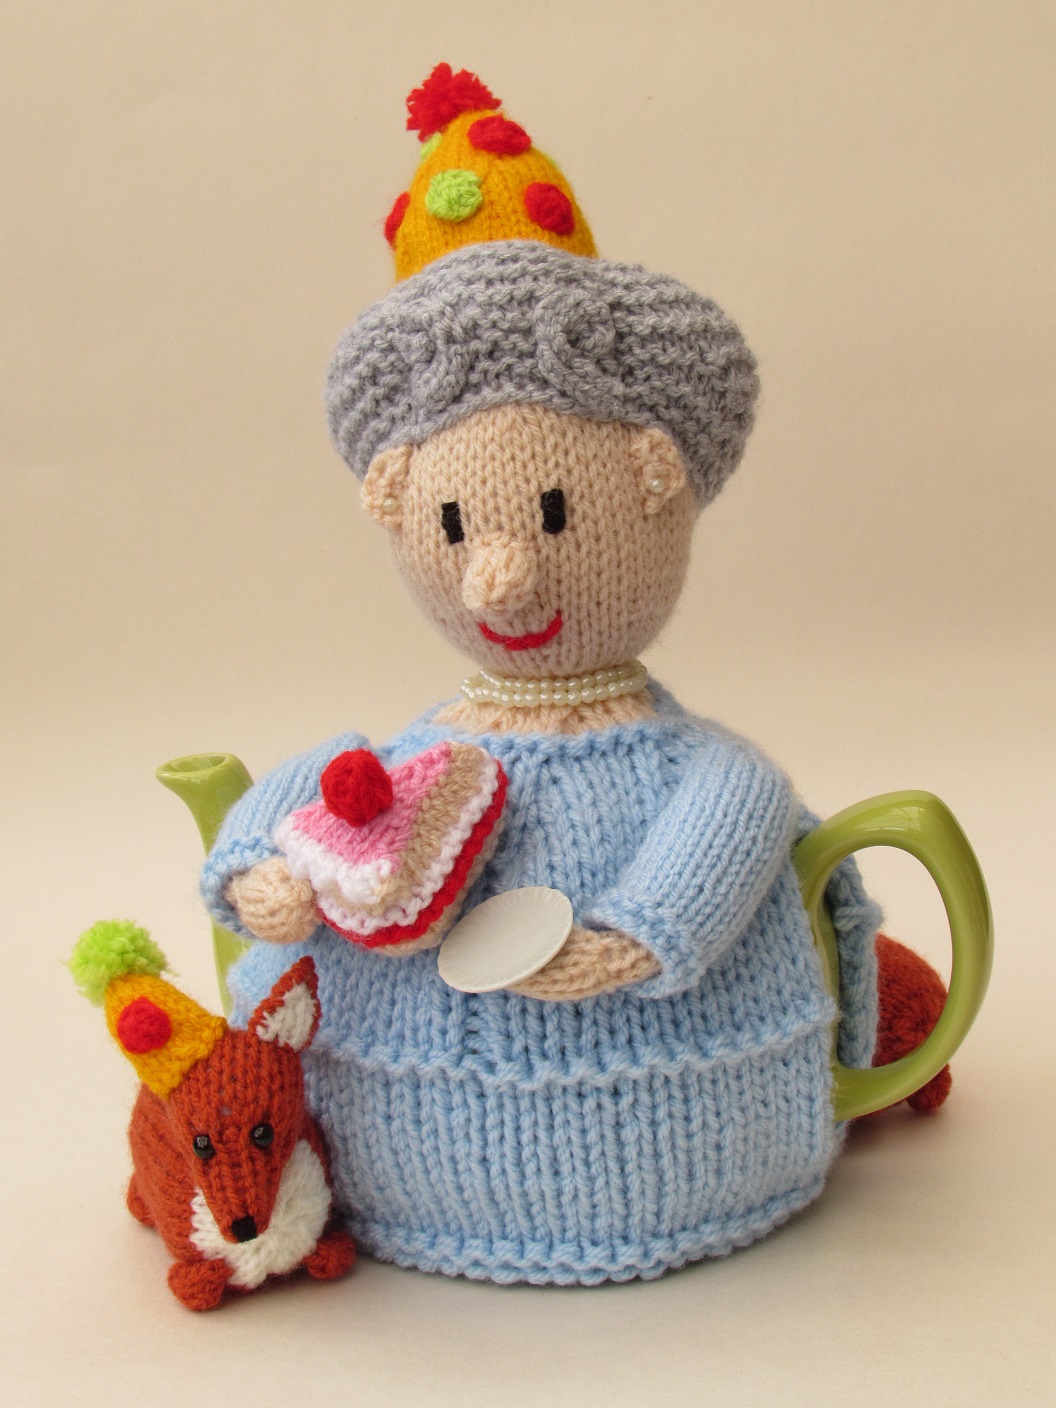 Queen's 90th Birthday knitting pattern